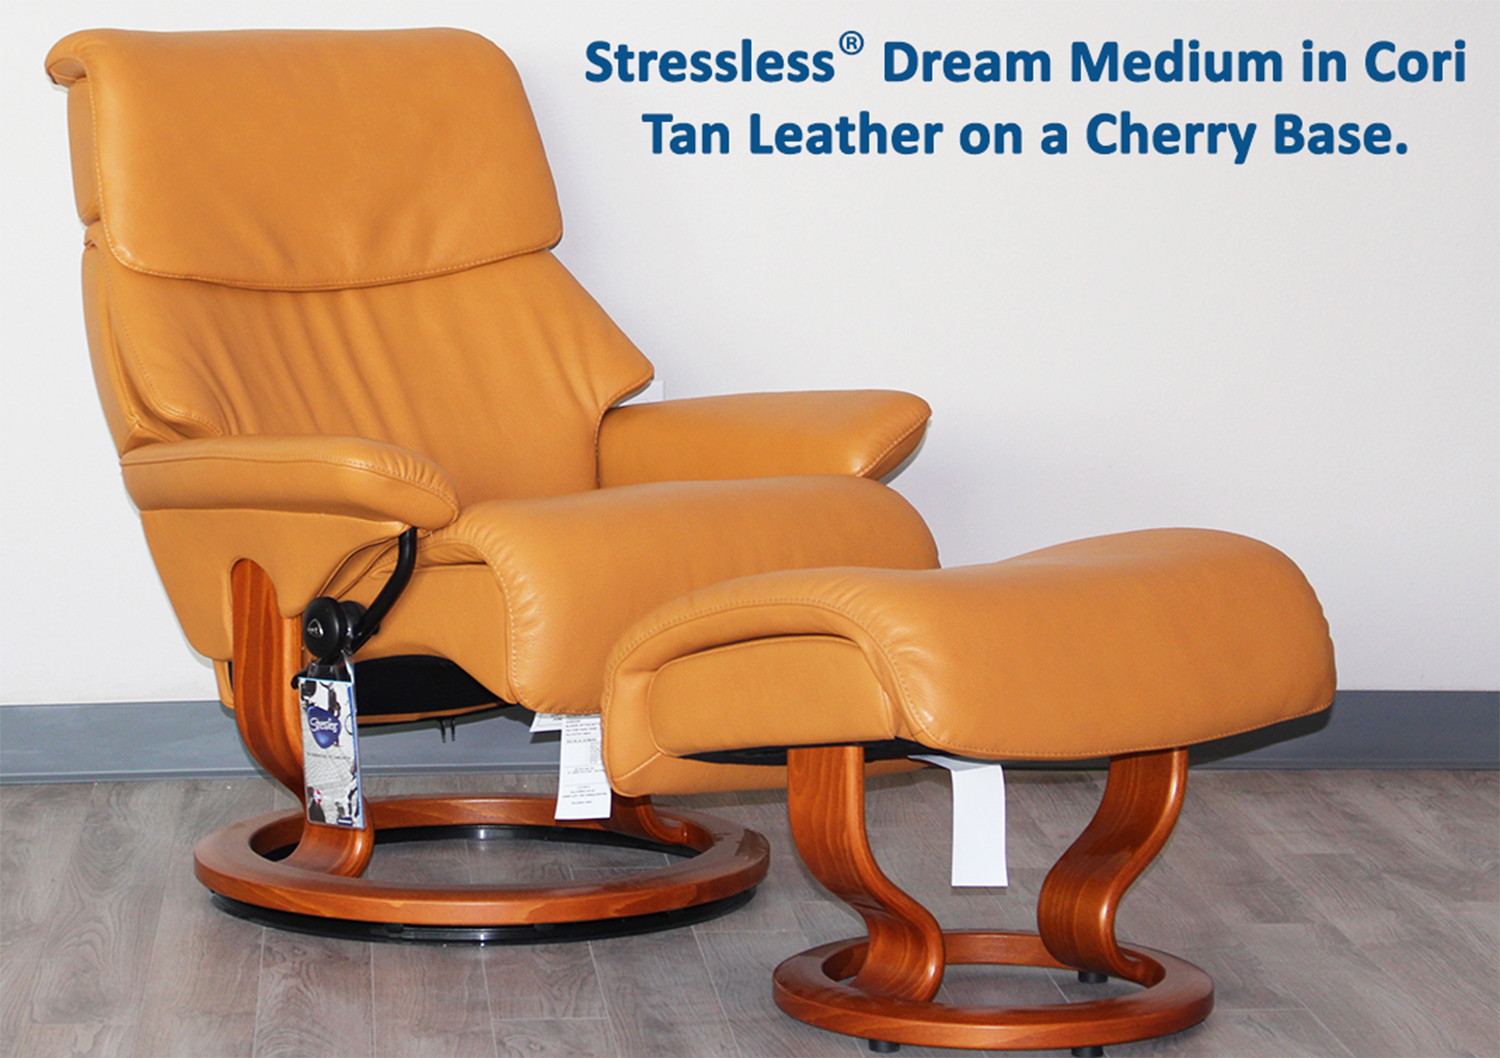 Stressless Medium Cori Recliners Cori Ekornes Medium Dream Leather - Chairs Stressless by Tan Leather Tan Dream